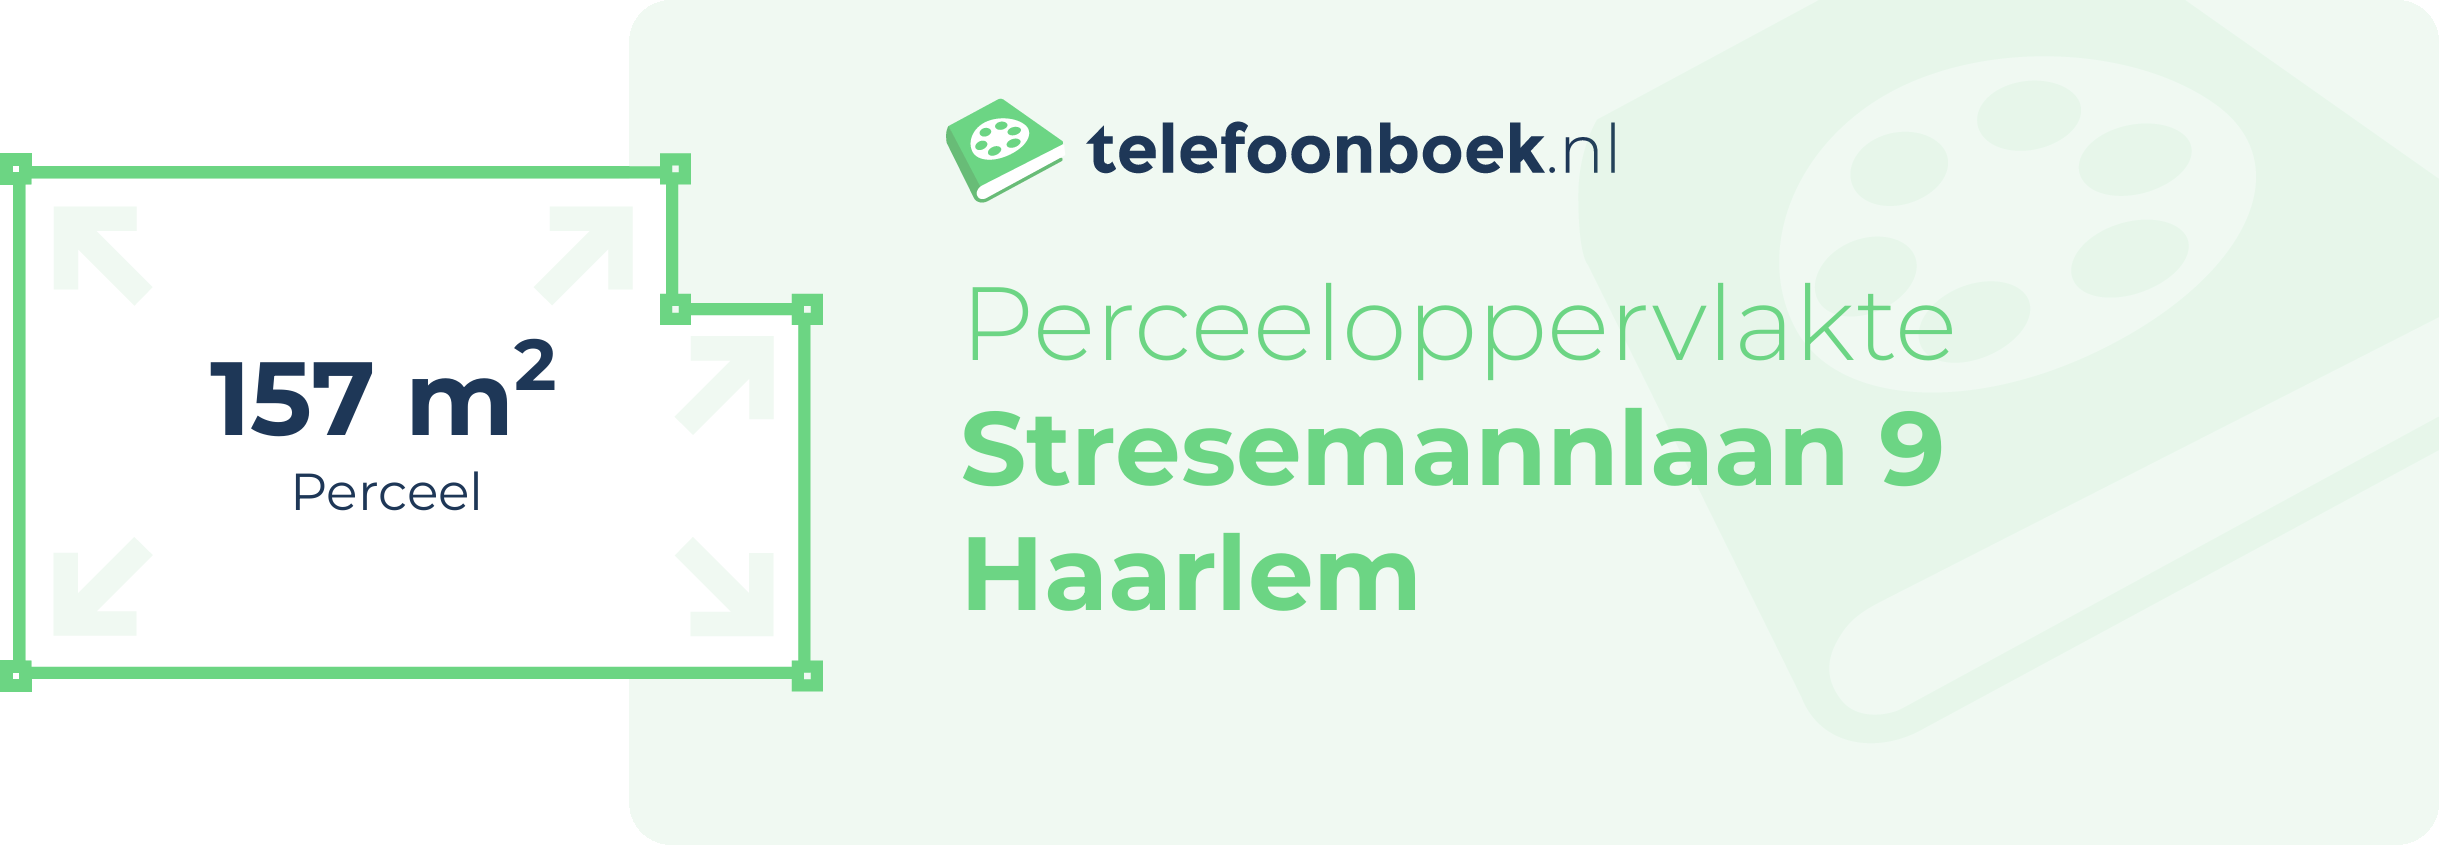 Perceeloppervlakte Stresemannlaan 9 Haarlem